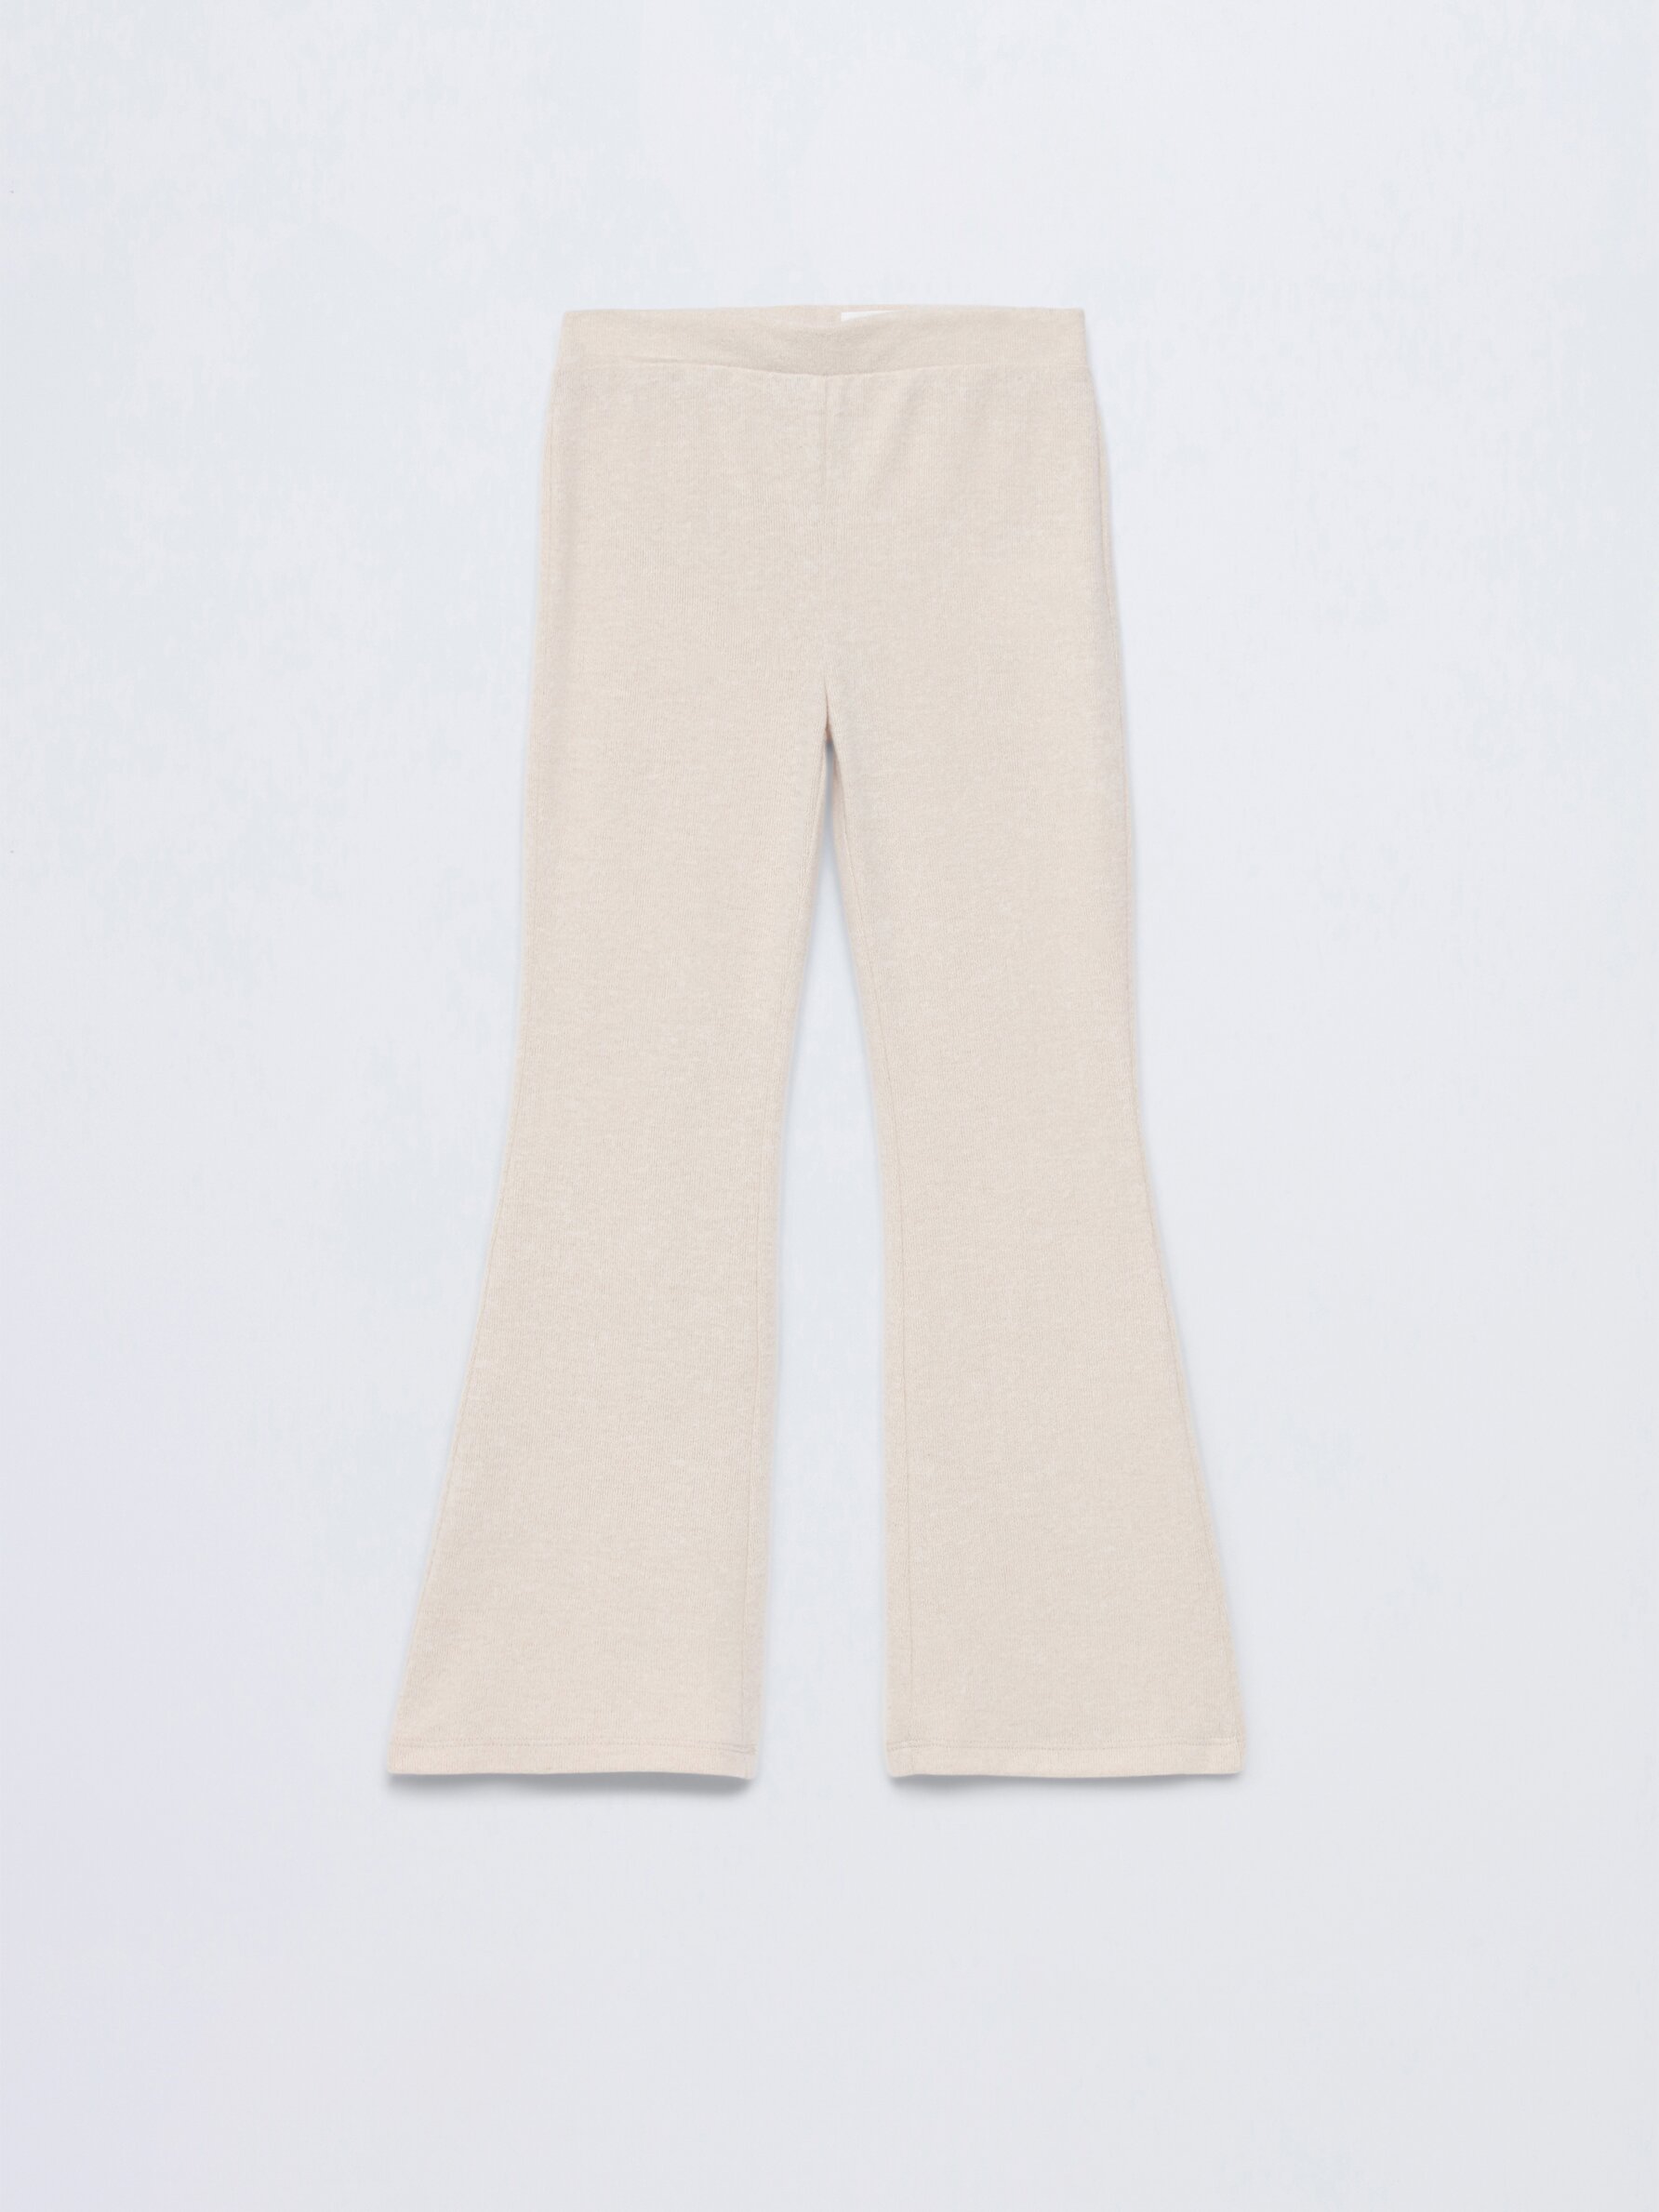 Flowing printed trousers - SALE - Woman -  Lefties UAE -  Dubai/Sharjah/Ajman/UAQ/Fujairah